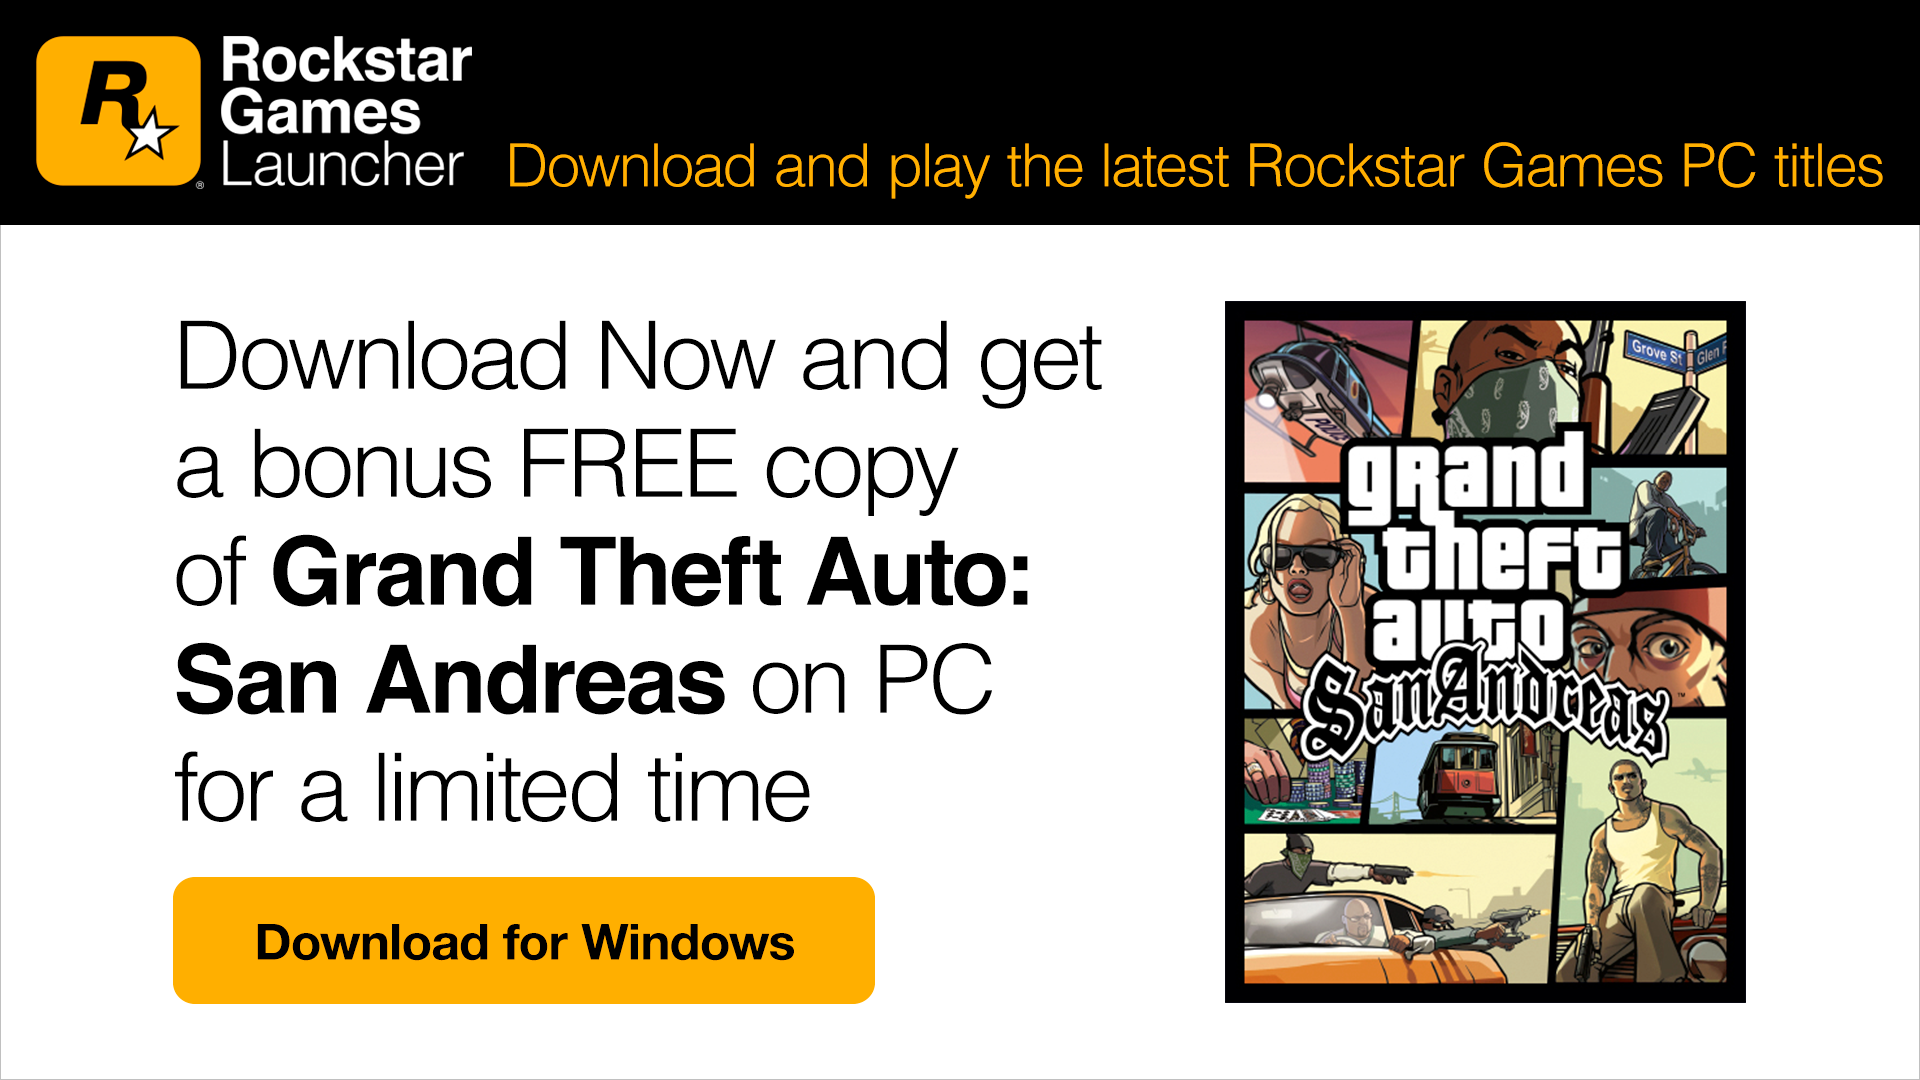 Download The Rockstar Games Launcher - Rockstar Games